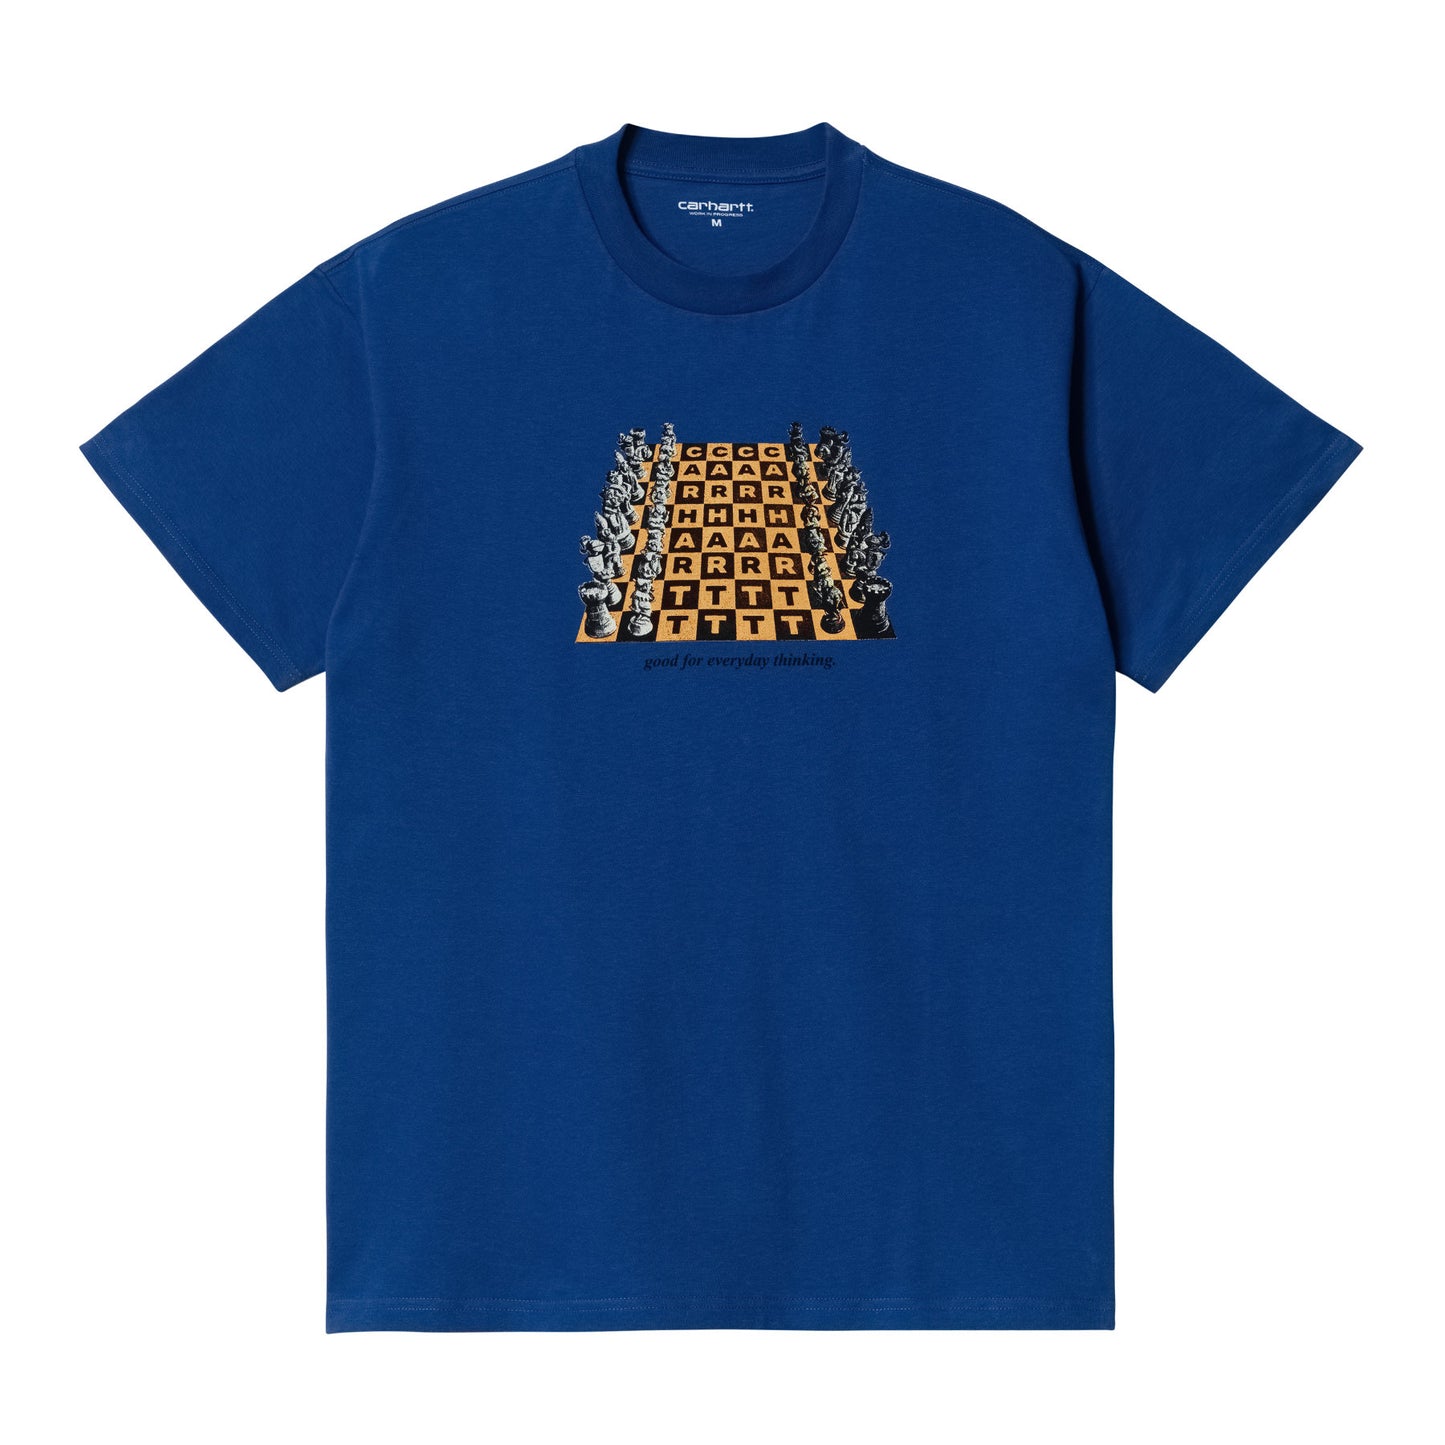 Carhartt WIP Chessboard T-Shirt Gulf. Foto de frente.